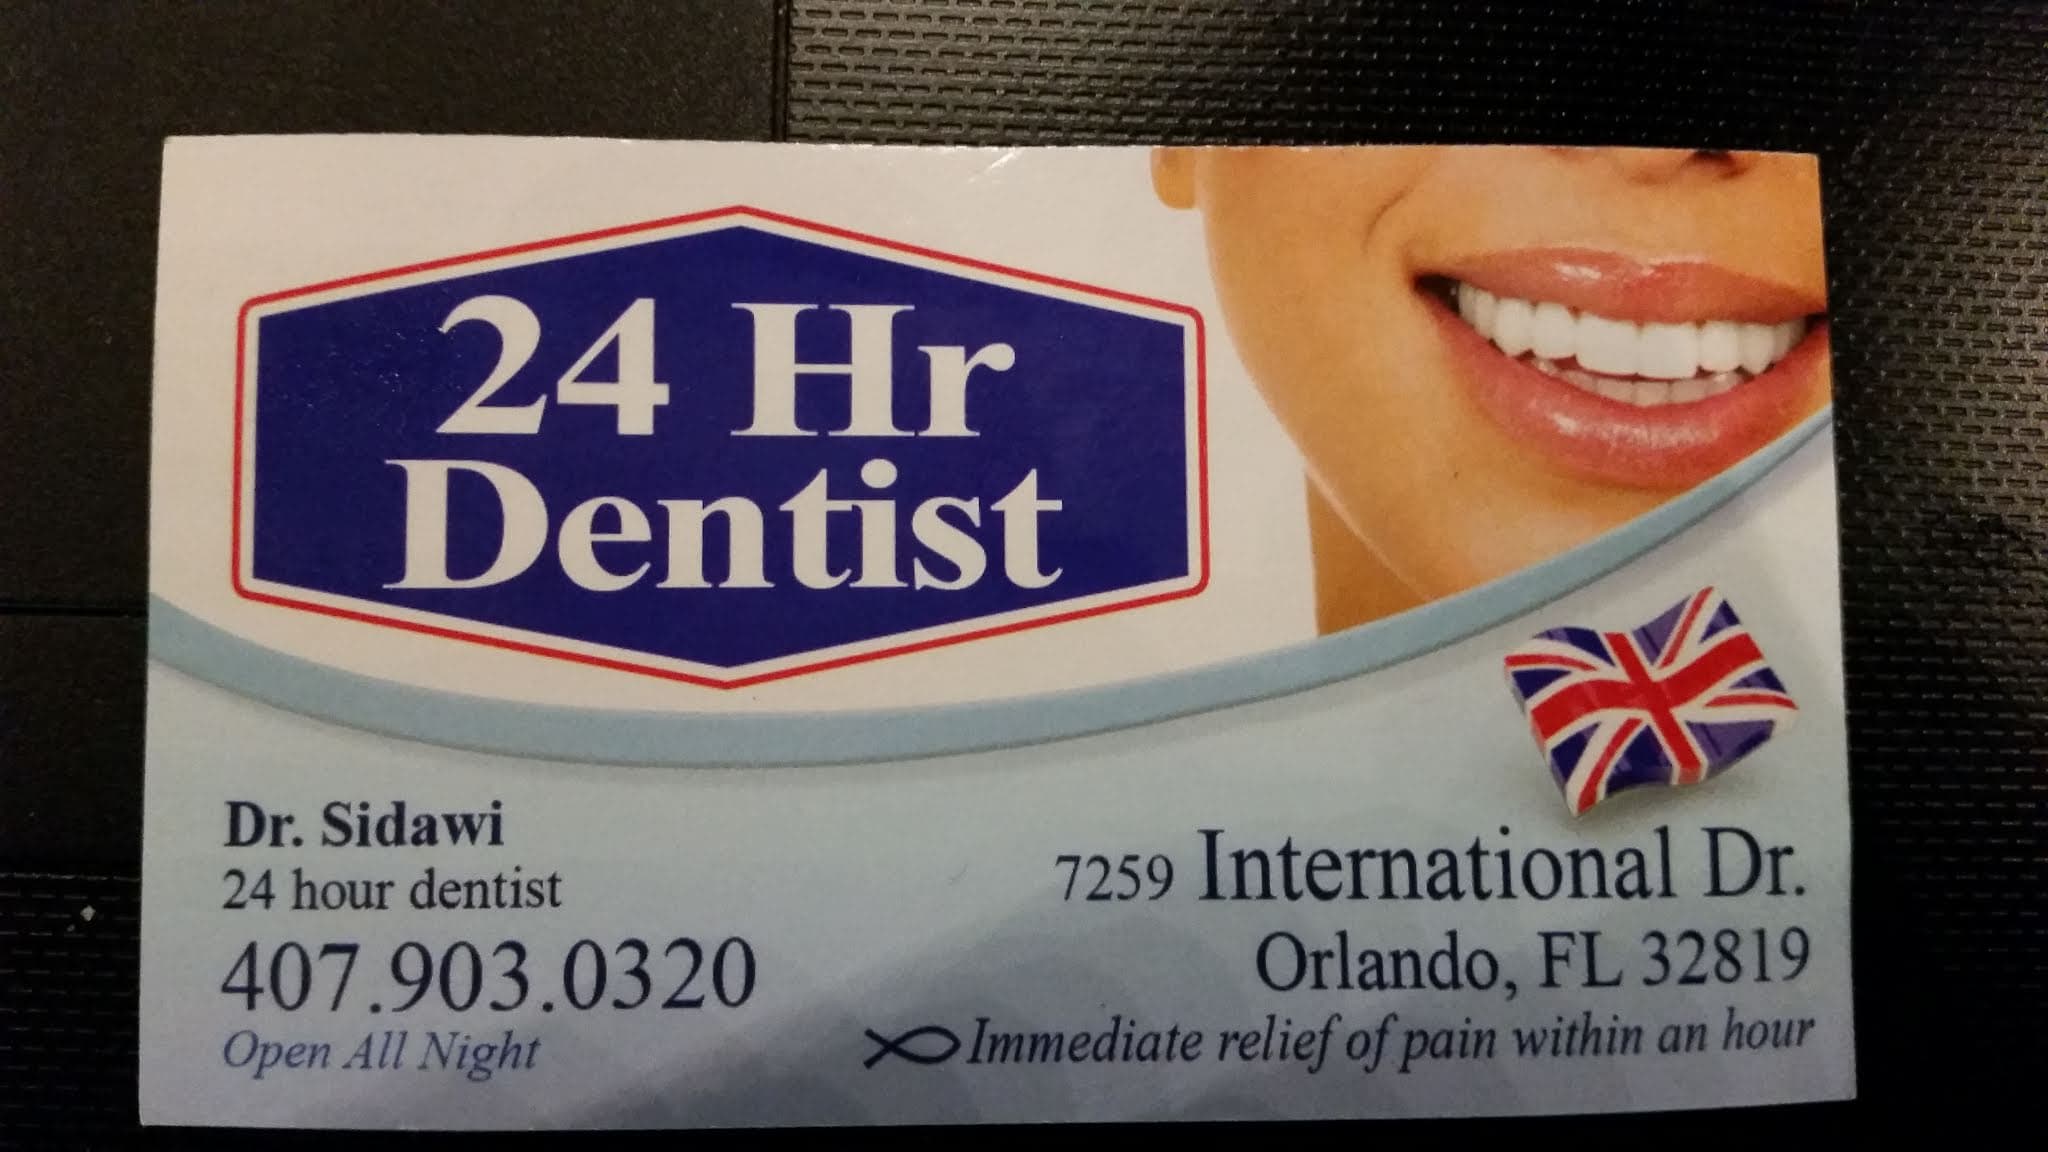 24 Hour Dentist - Orlando, FL, US, cosmetic dentistry